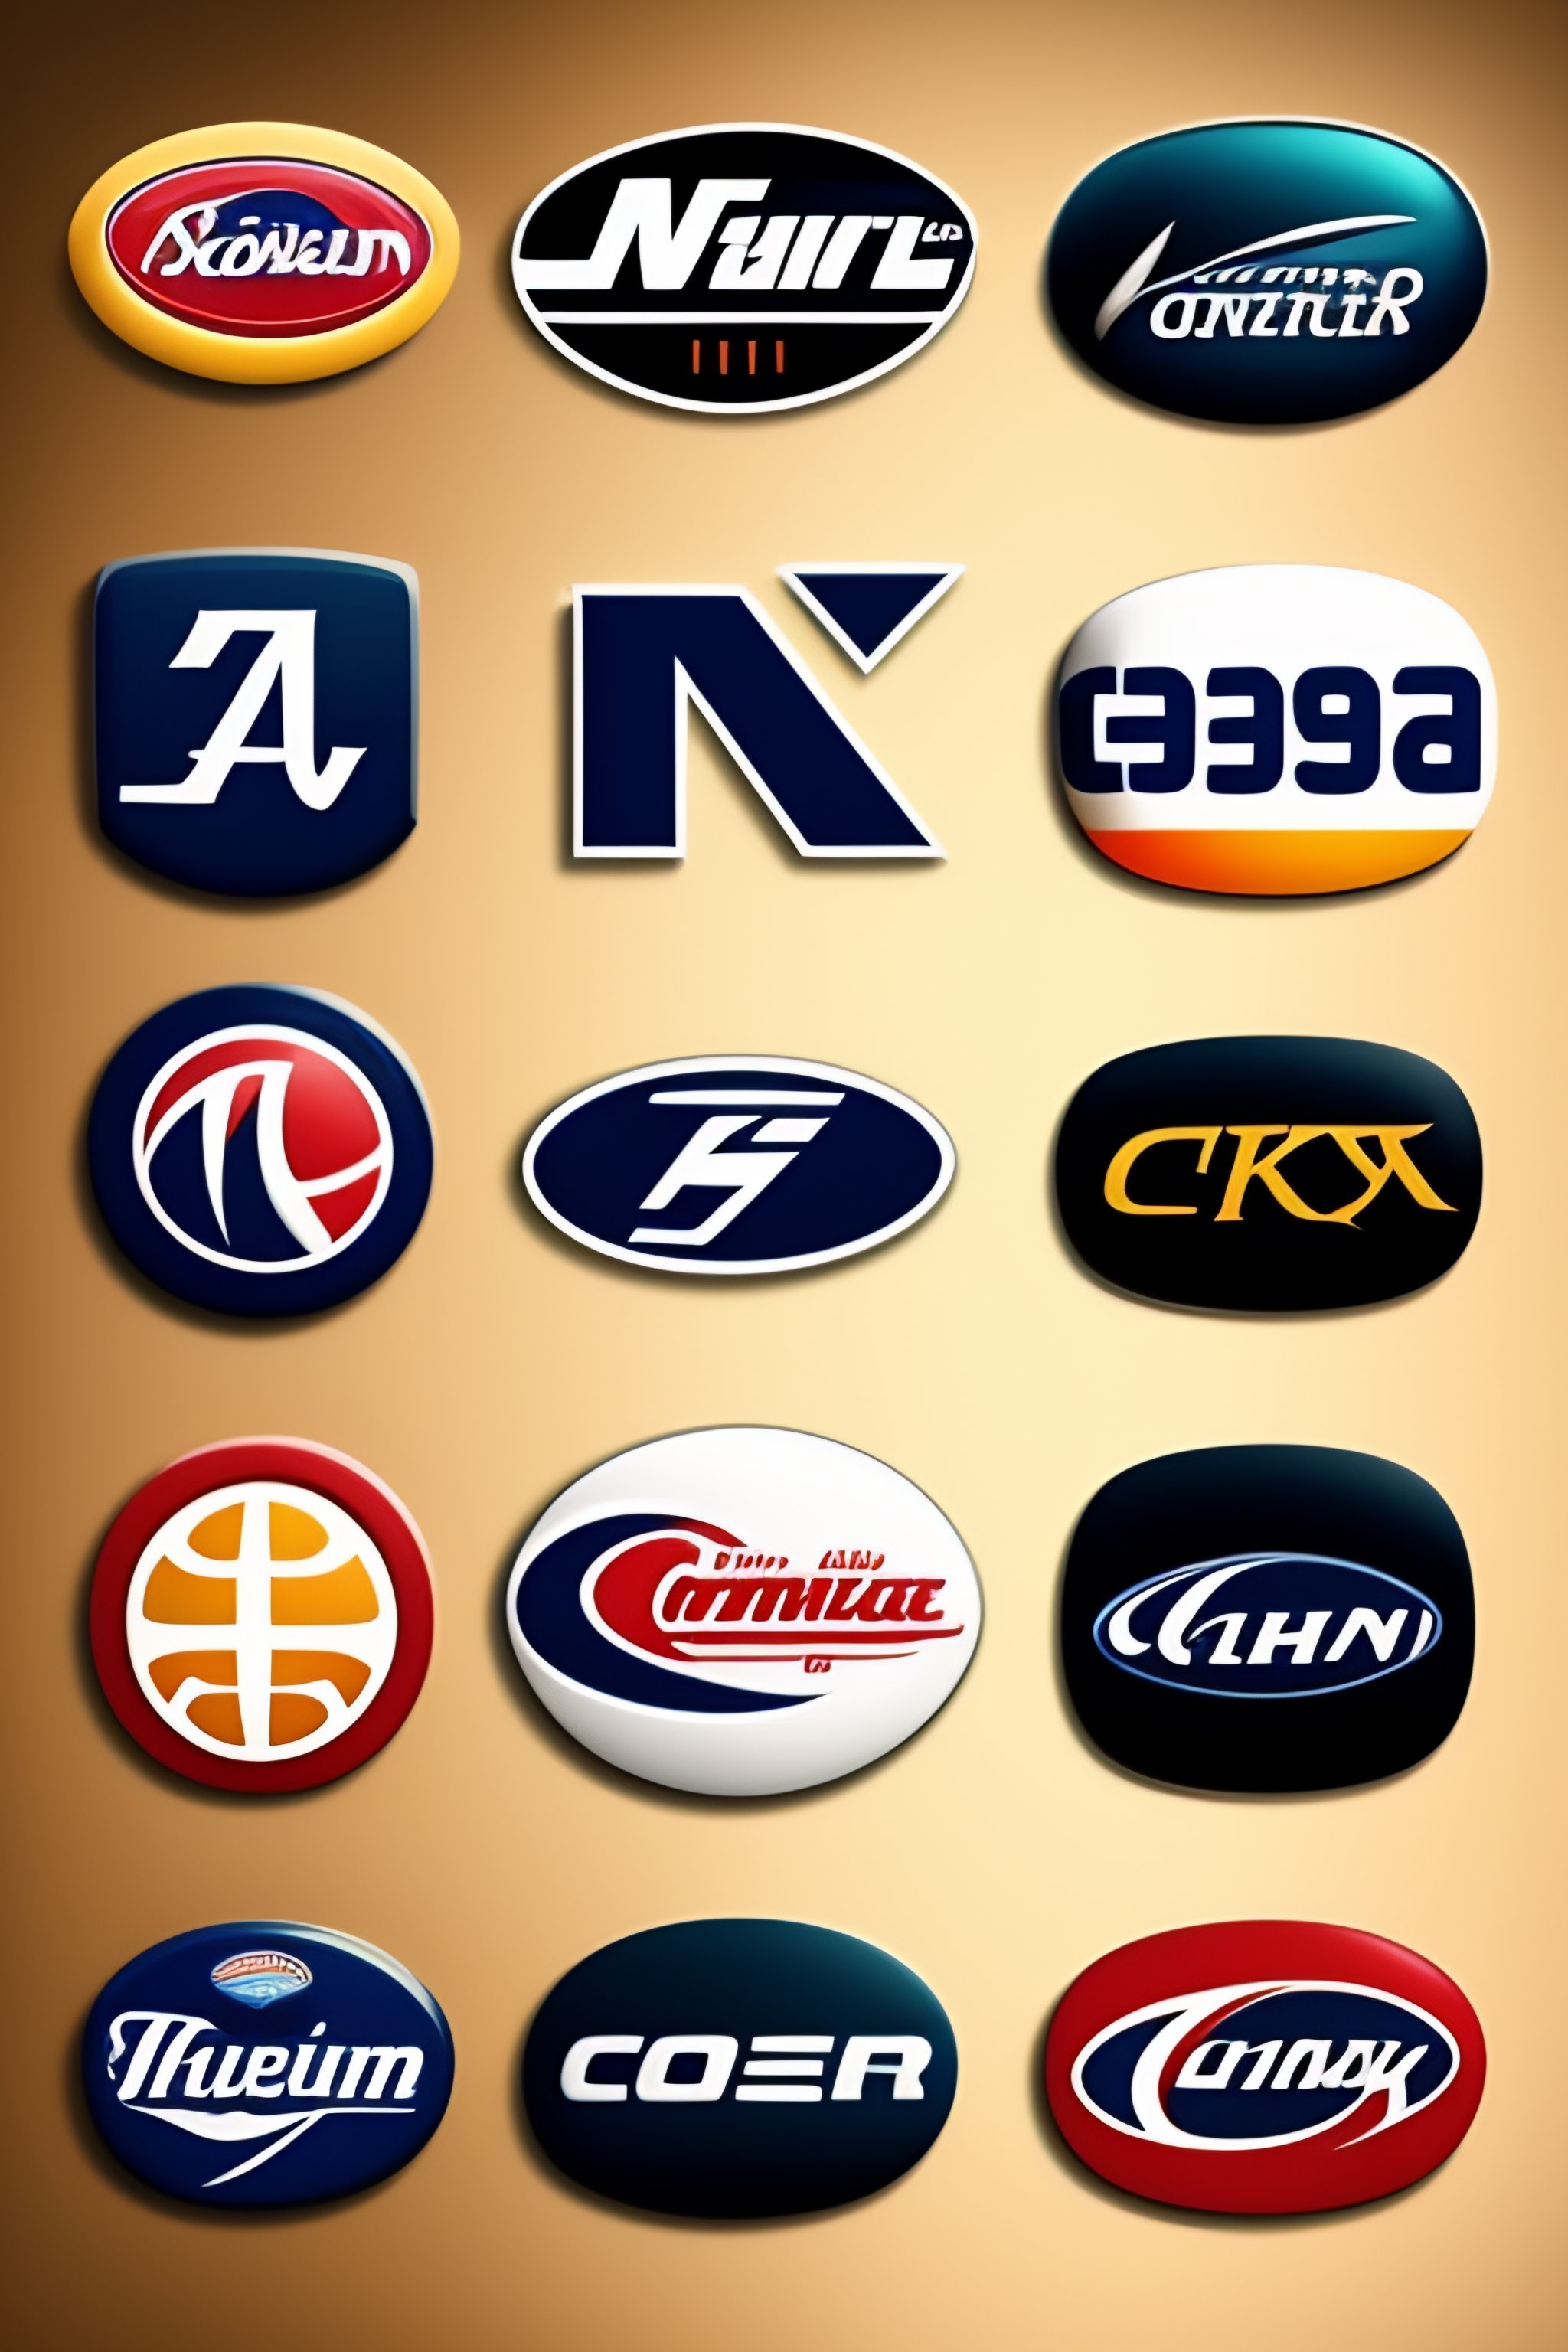 sports logos and names